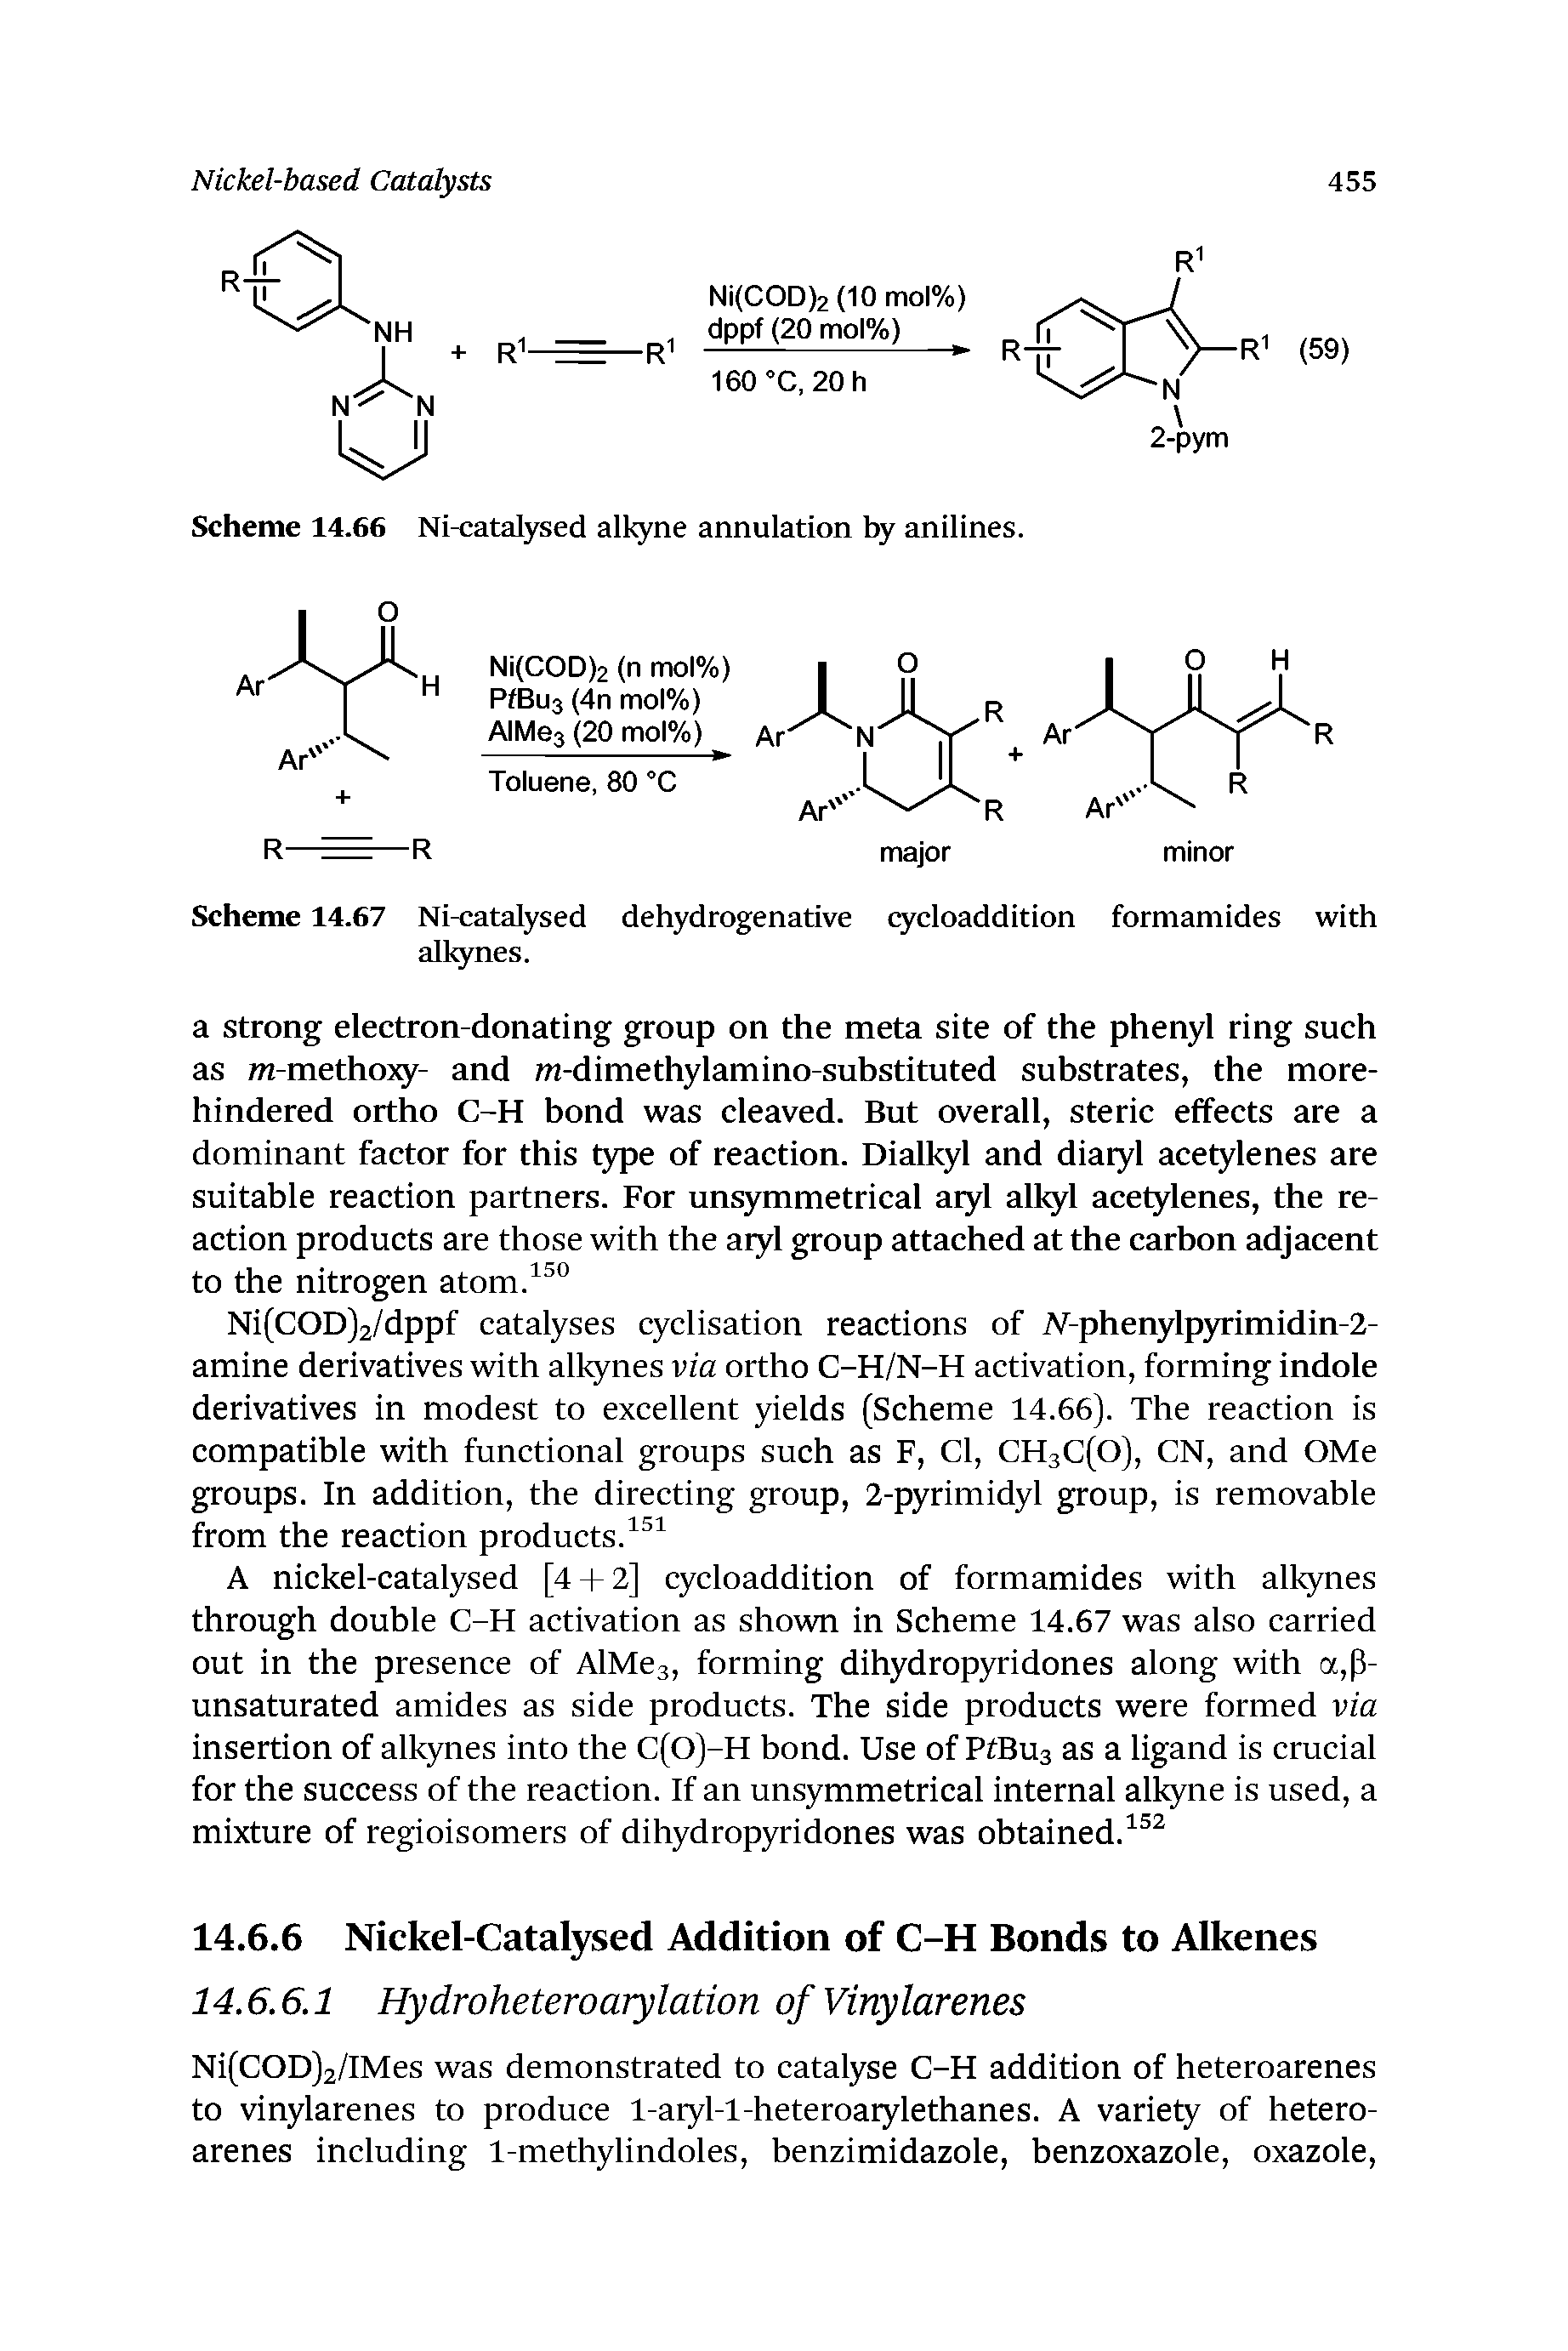 Scheme 14.67 Ni-catalysed dehydrogenative cycloaddition formamides with allgrnes.